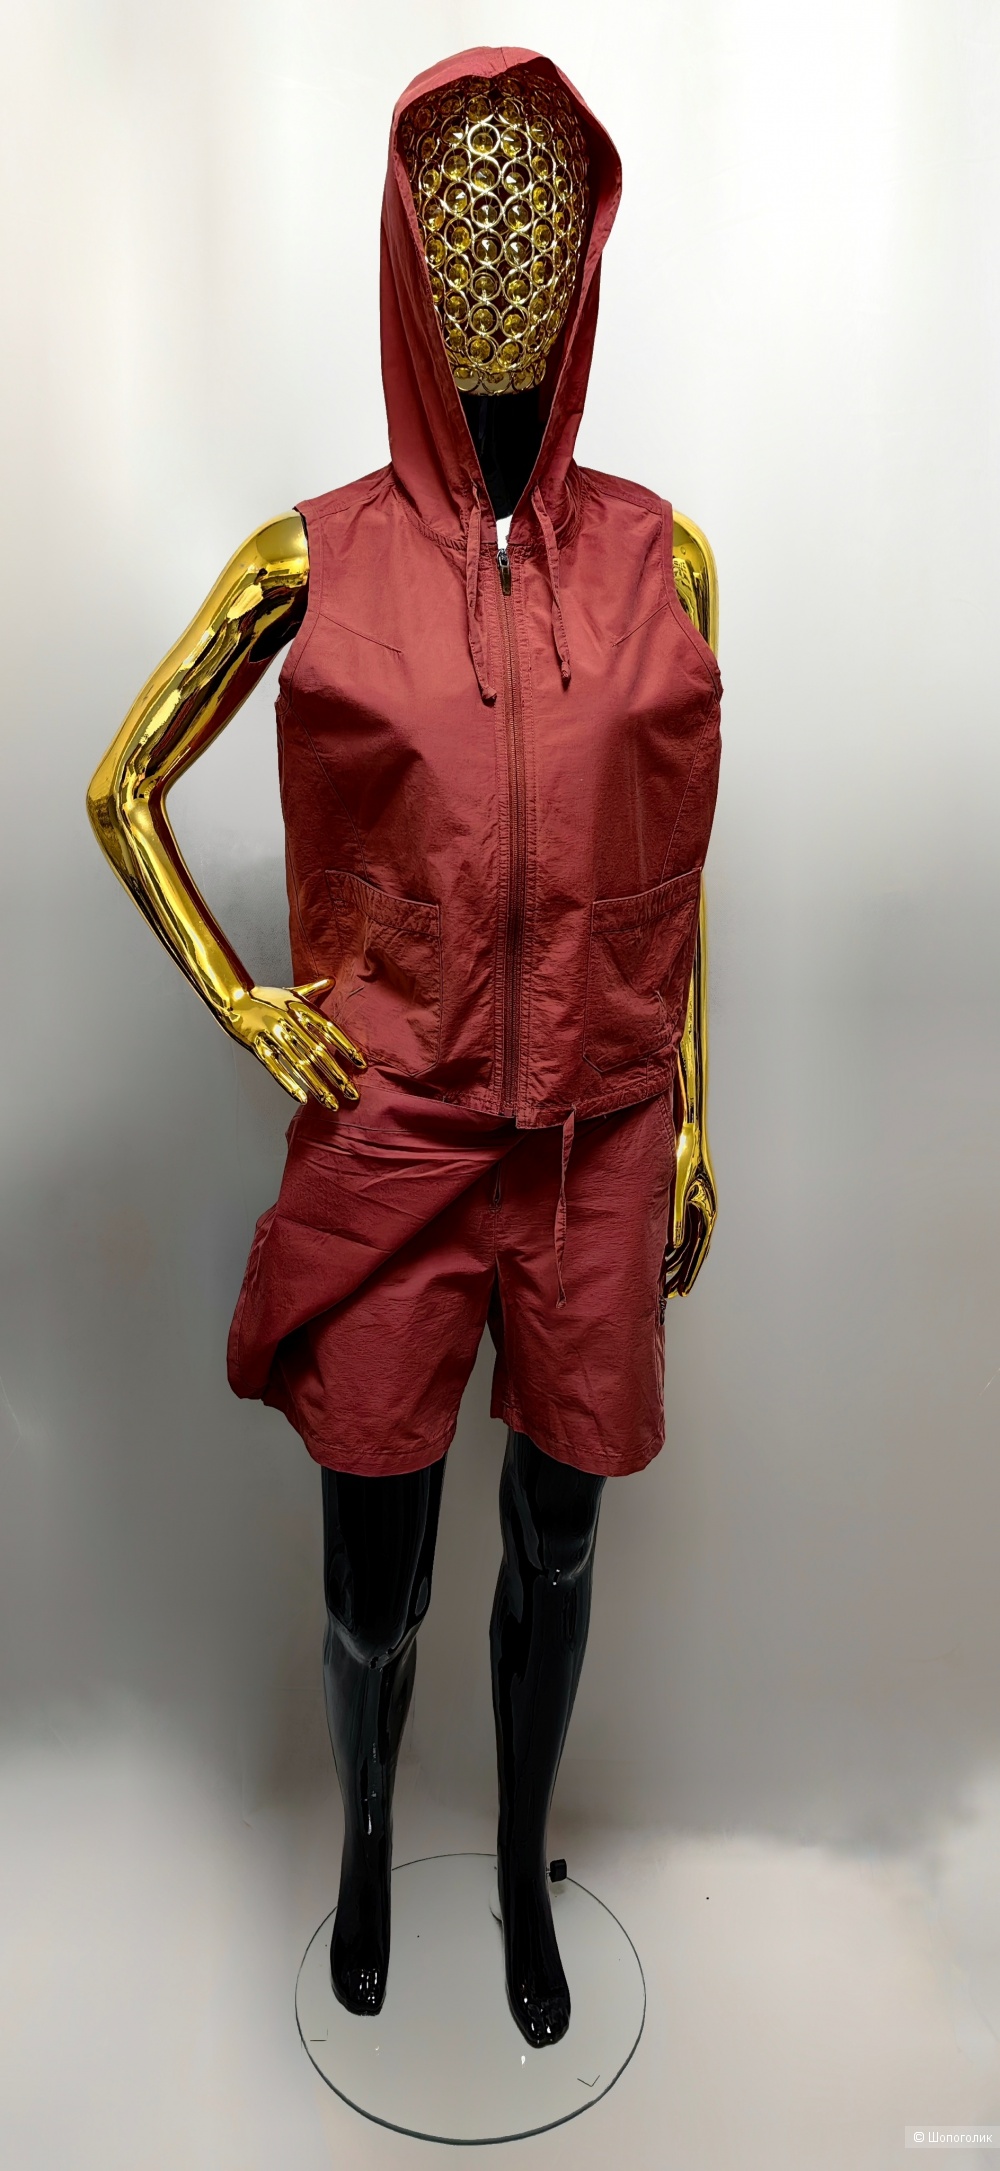 Спортивный костюм COLUMBIA 42 размера (XS-S)